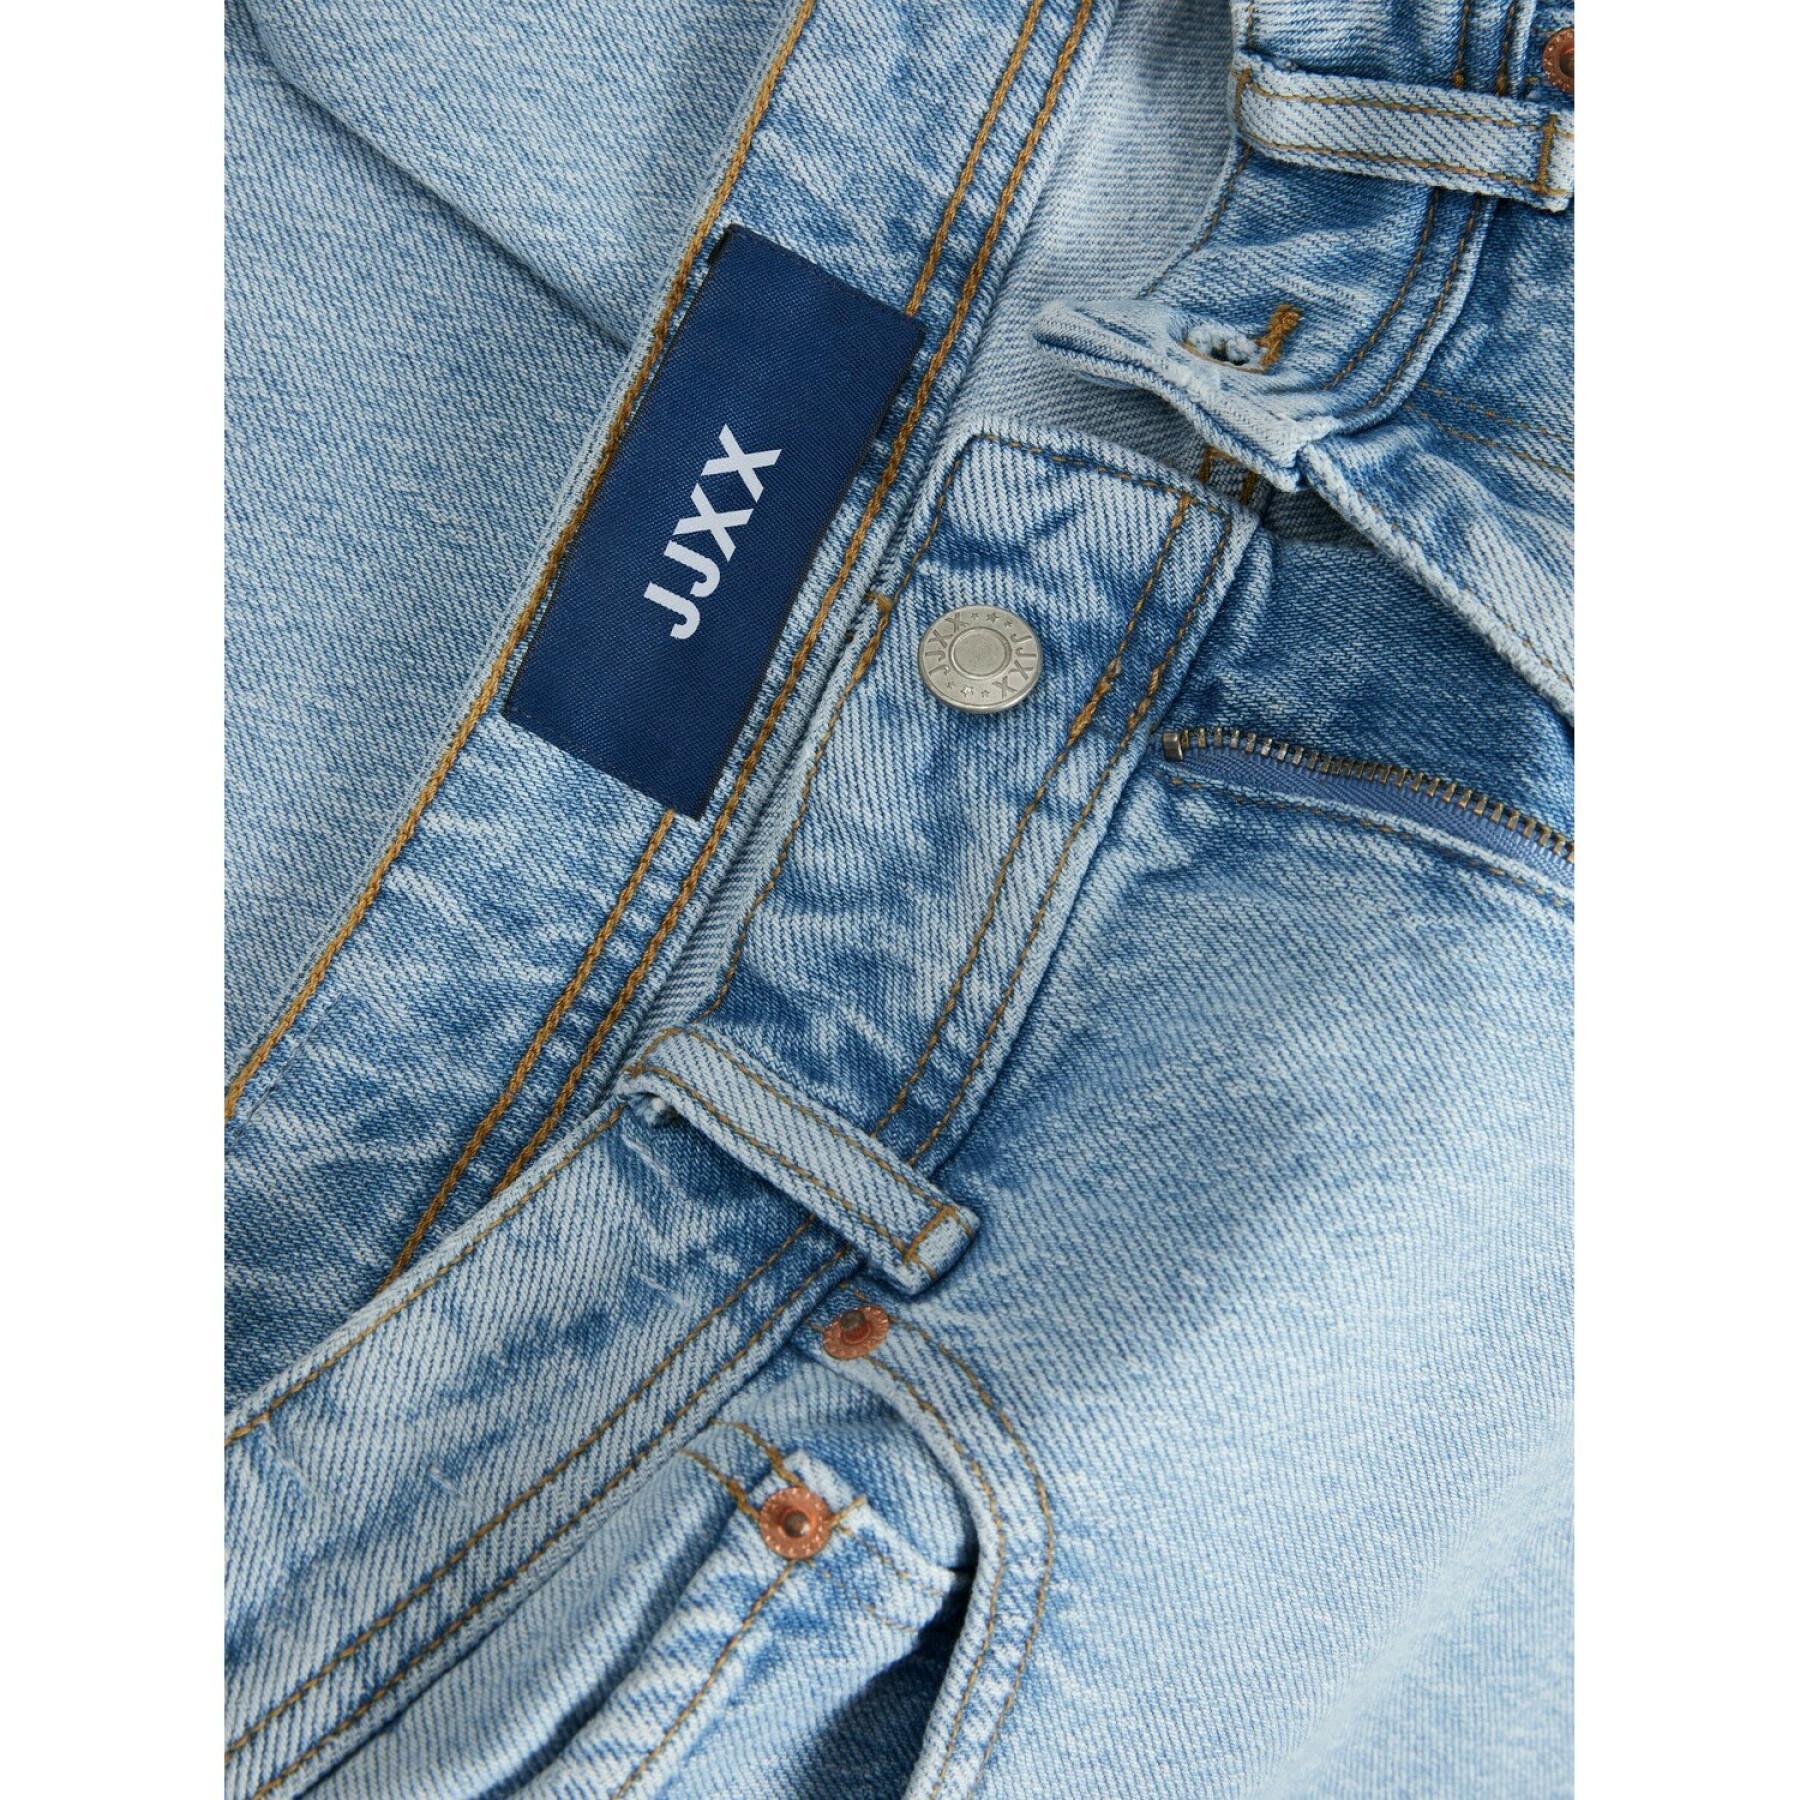 Women's skinny jeans JJXX berlin nc2004